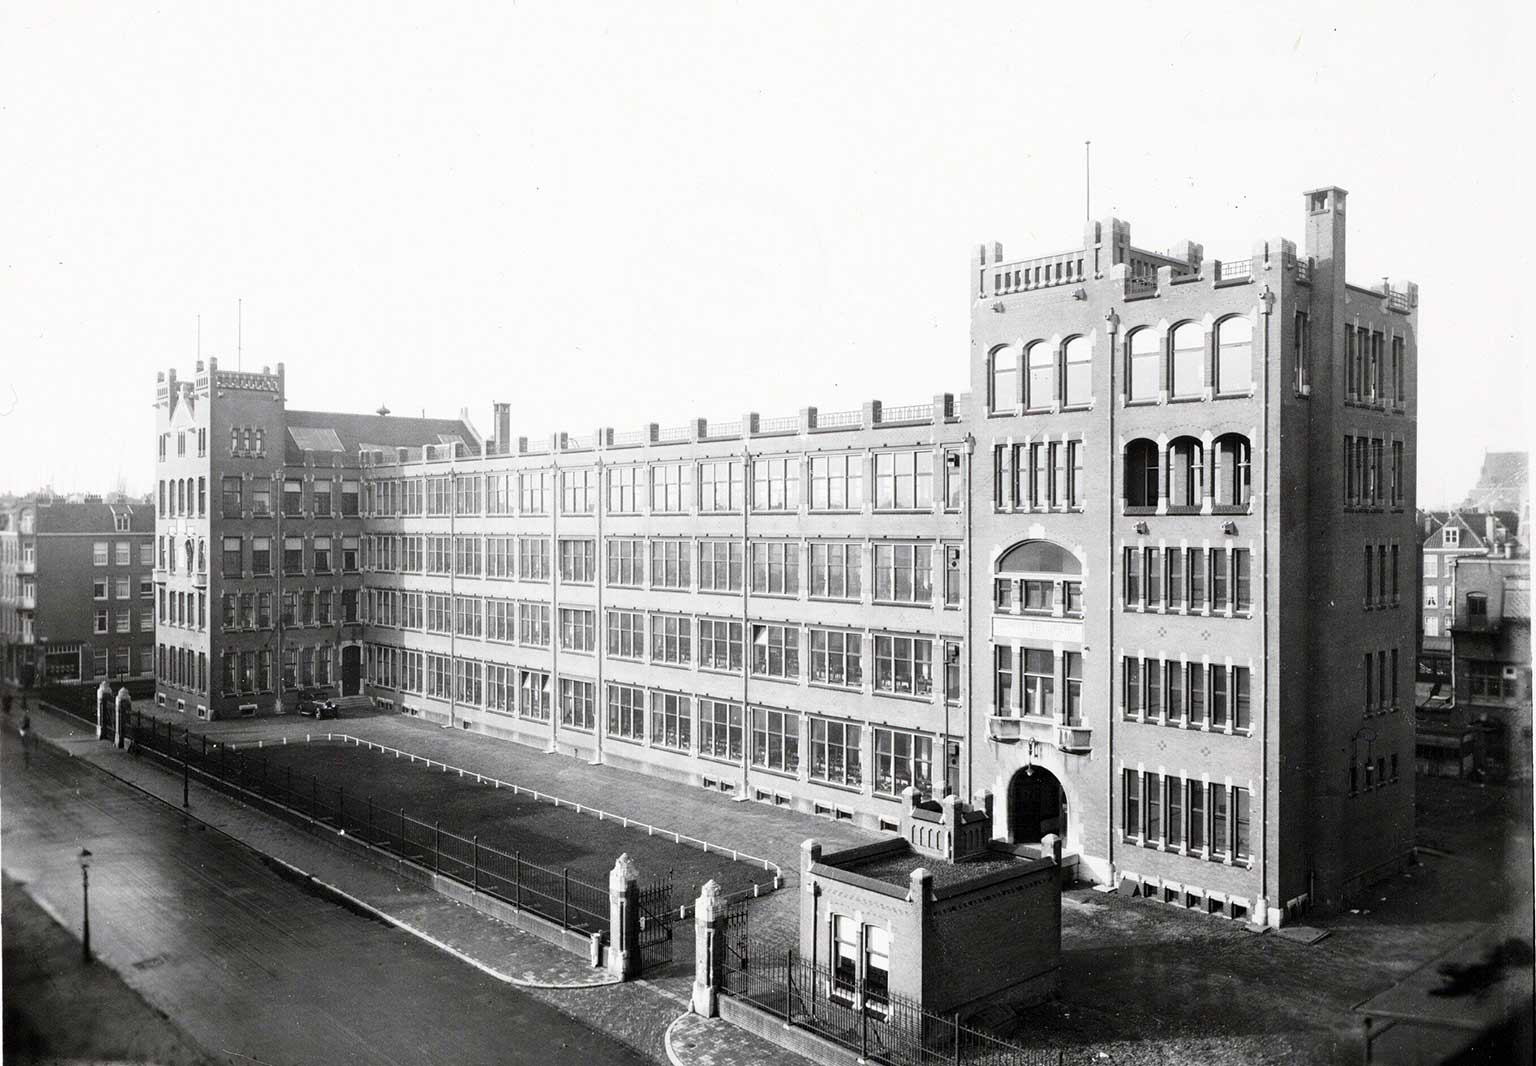 Tolstraat 127-129, Amsterdam, diamond polishing factory I.J. Asscher in 1907